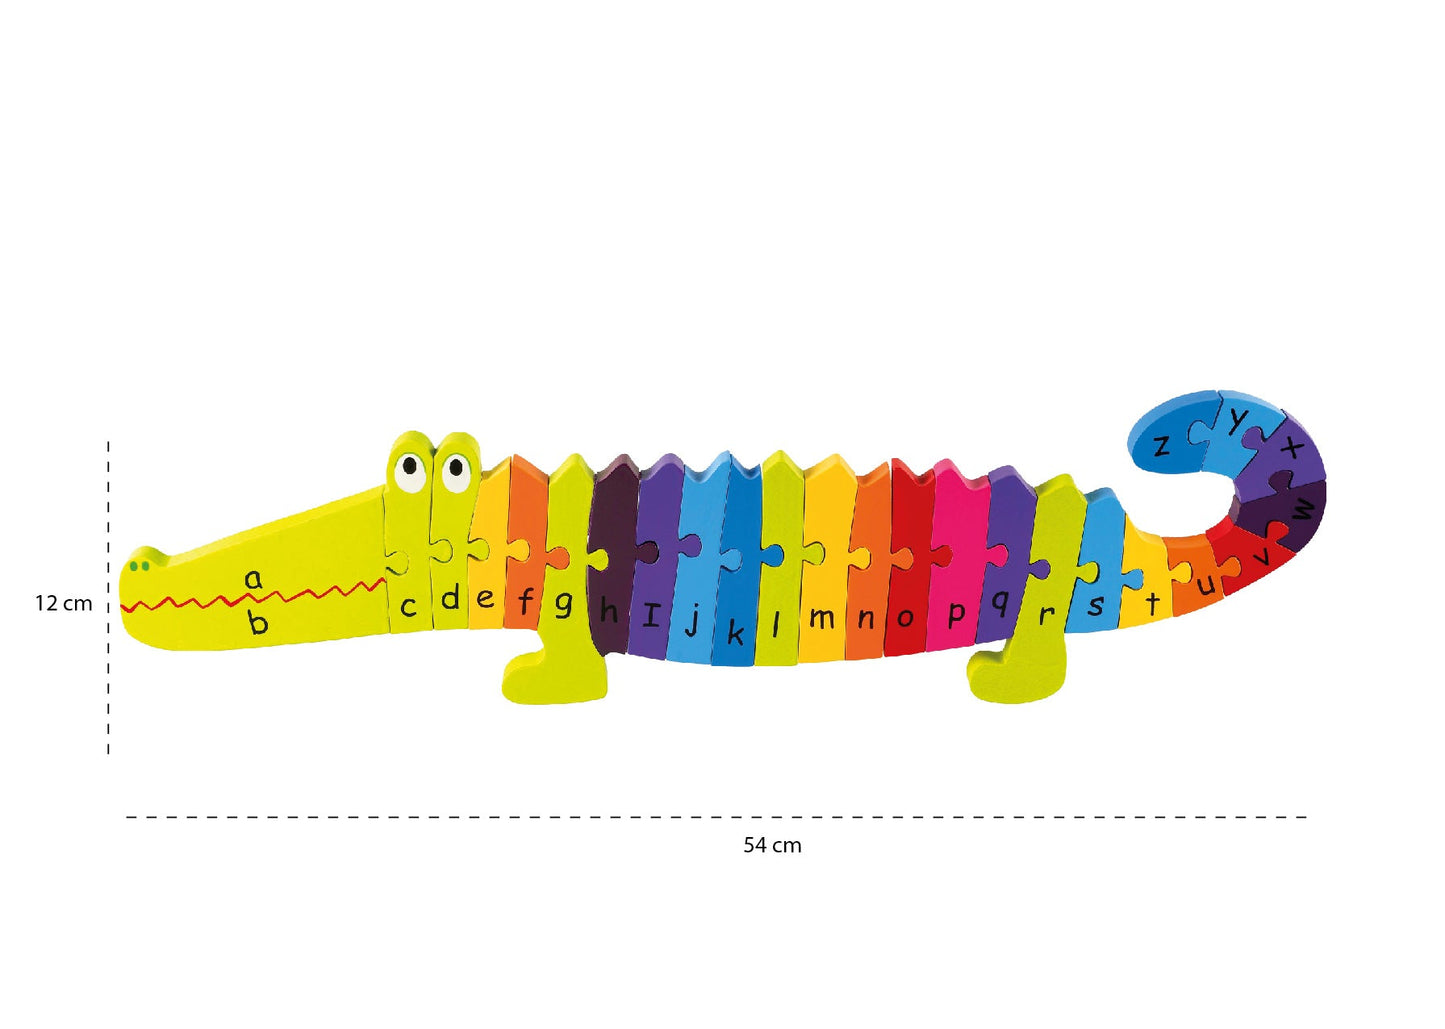 Orange Tree Toys Alphabet Crocodile Puzzle